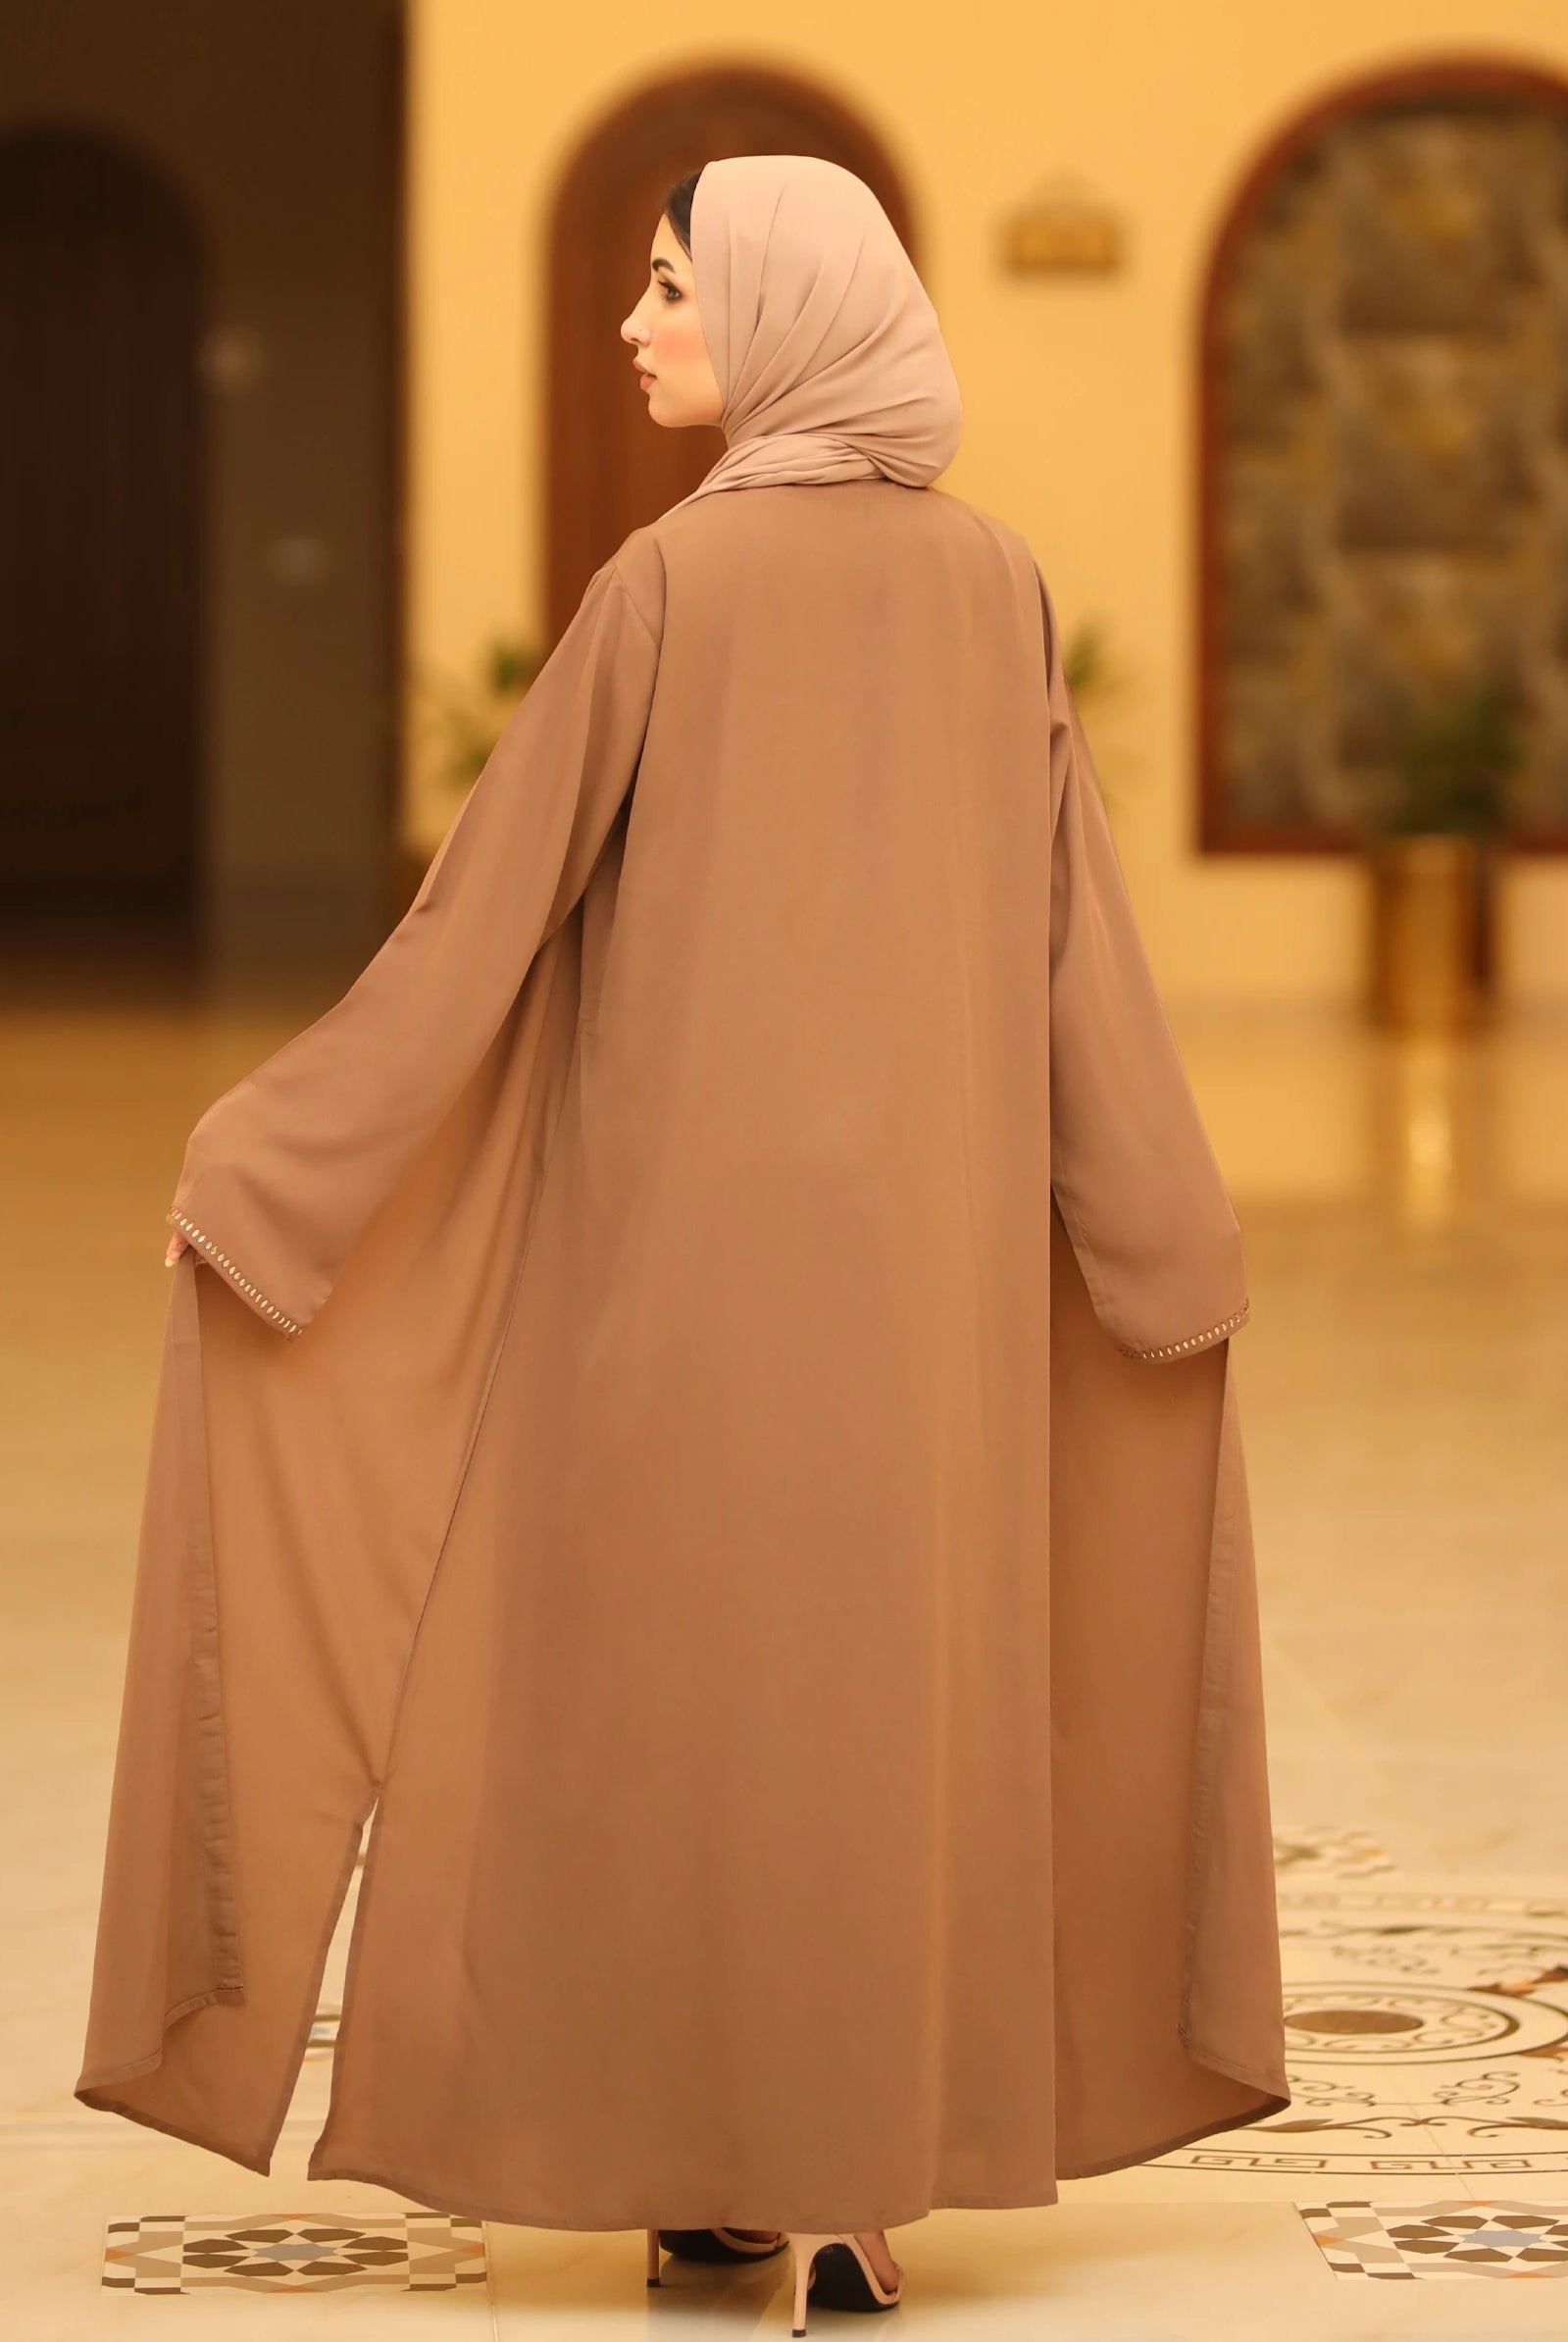 brown open abaya